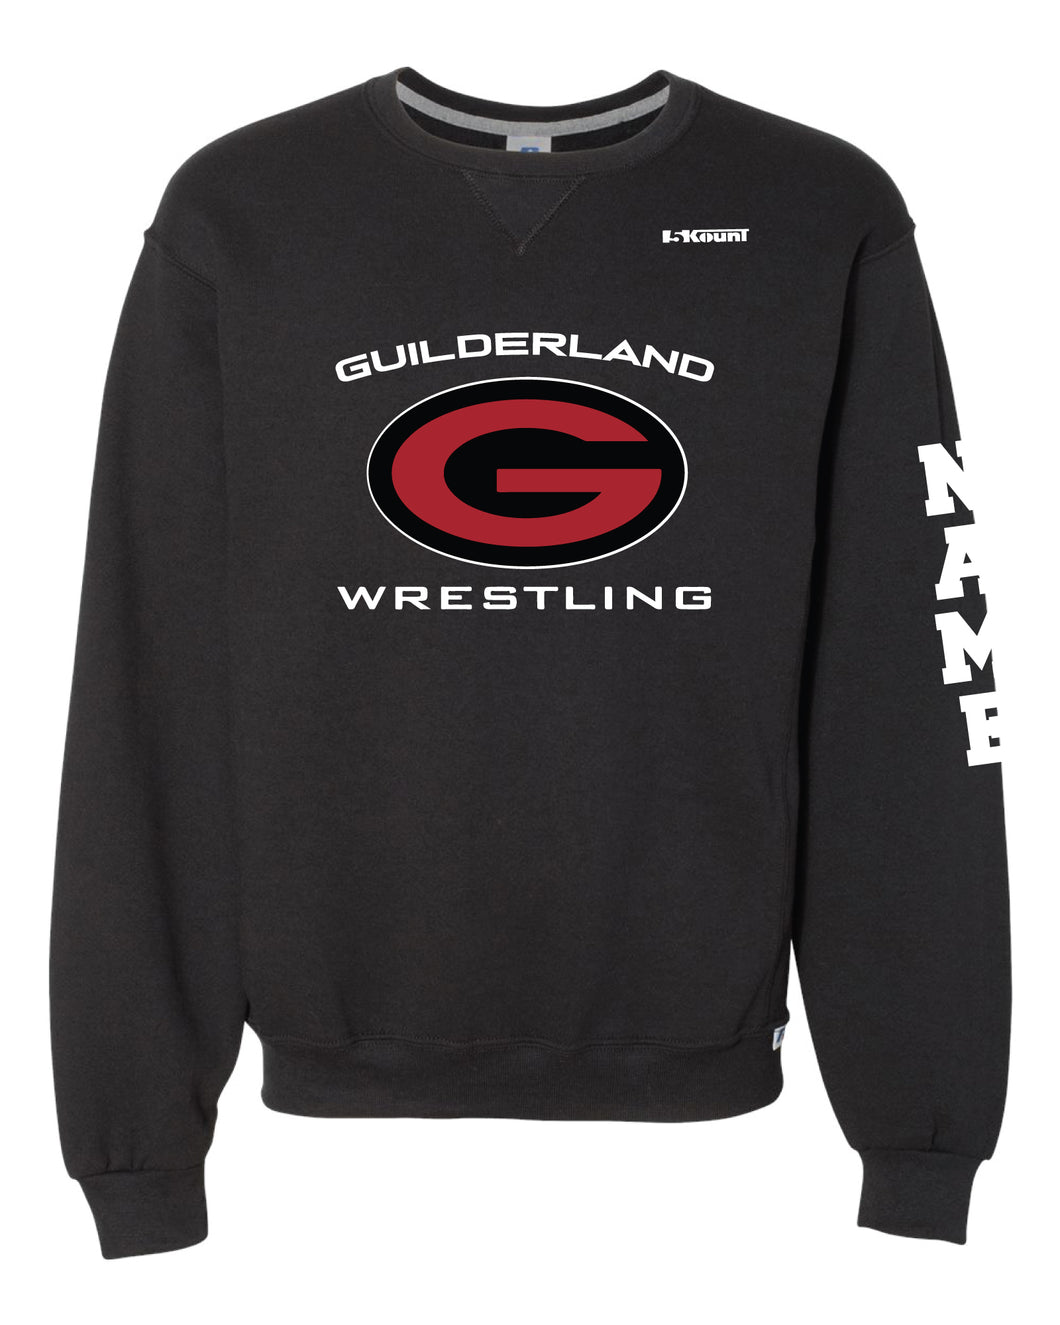 Guilderland Wrestling Russell Athletic Cotton Crewneck Sweatshirt - Black - 5KounT2018